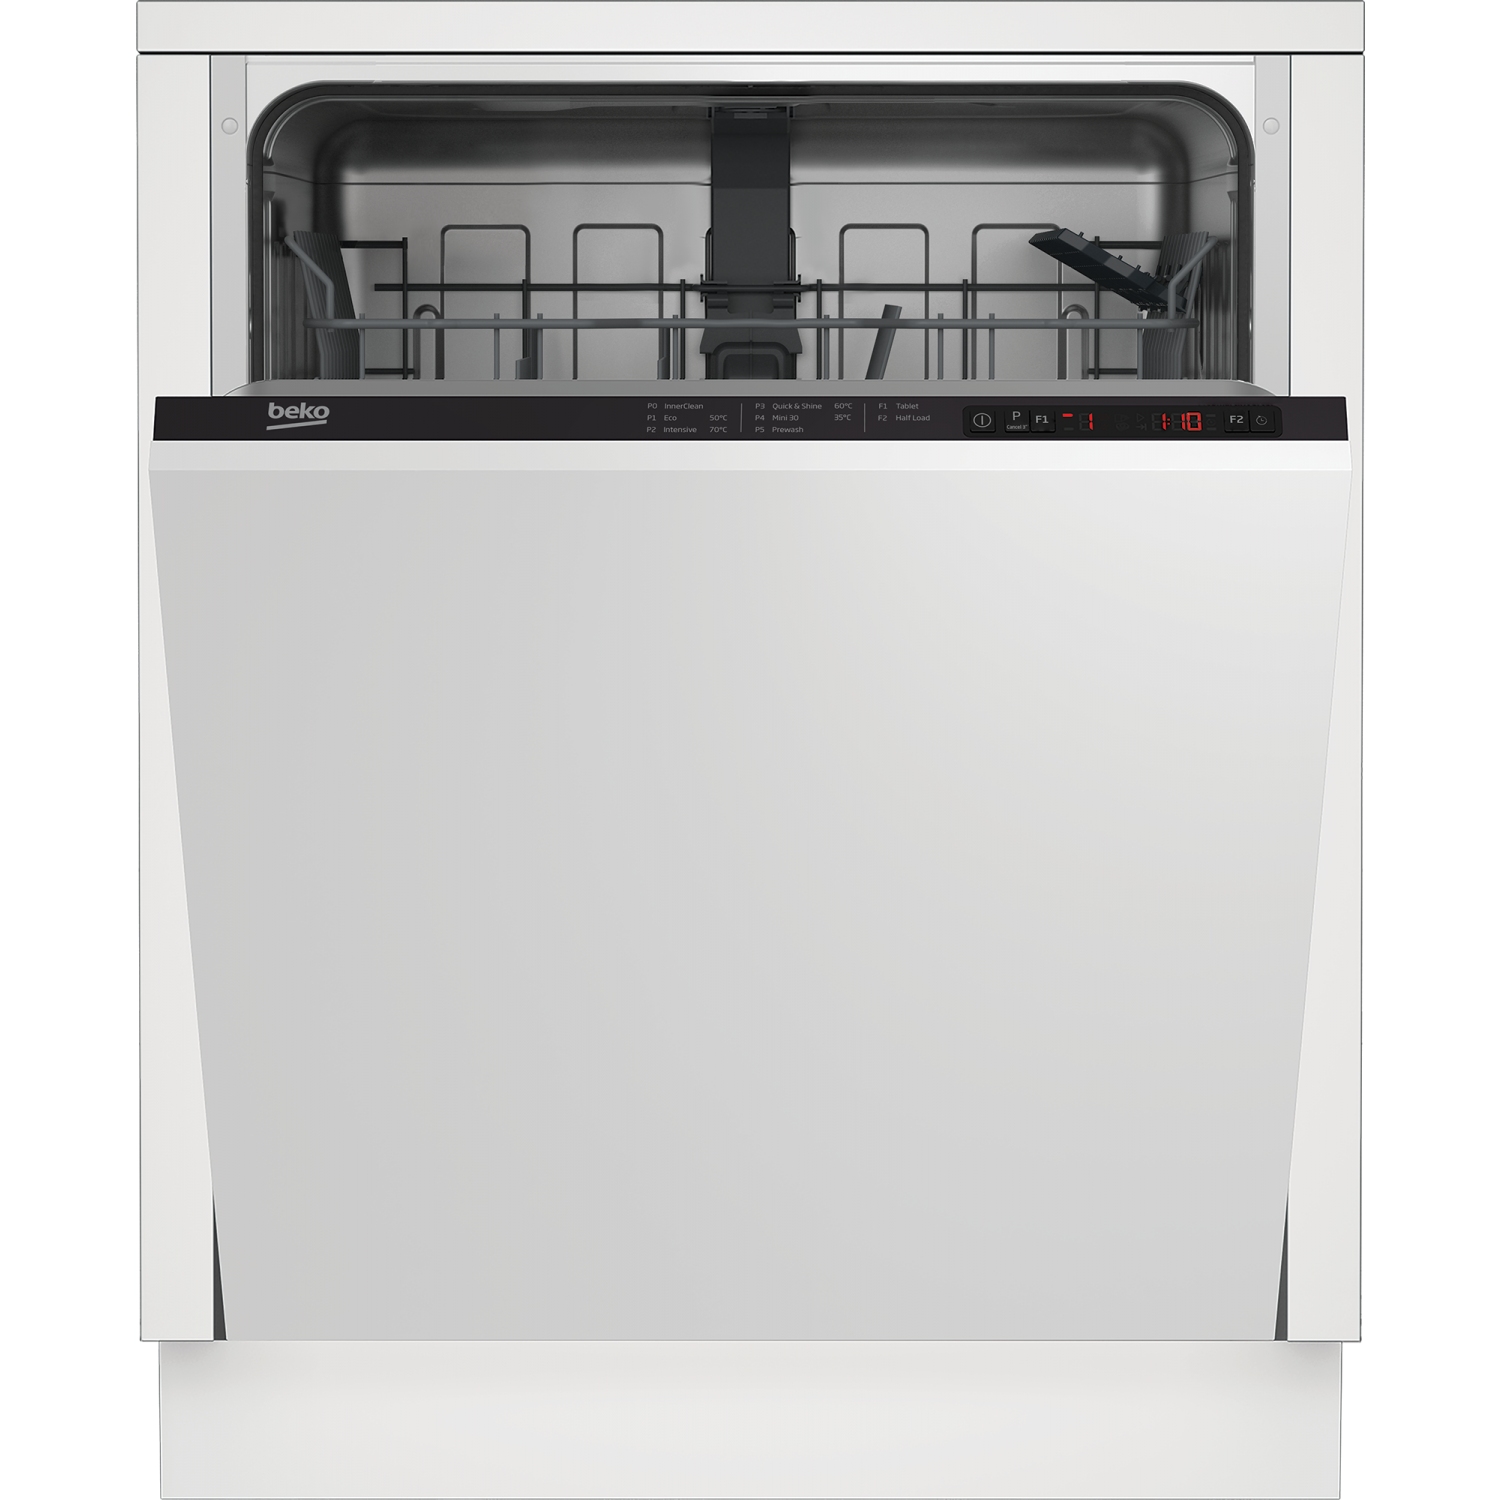 Beko DIN15322 Integrated Full Size Dishwasher - White - 13 Place Settings - 1